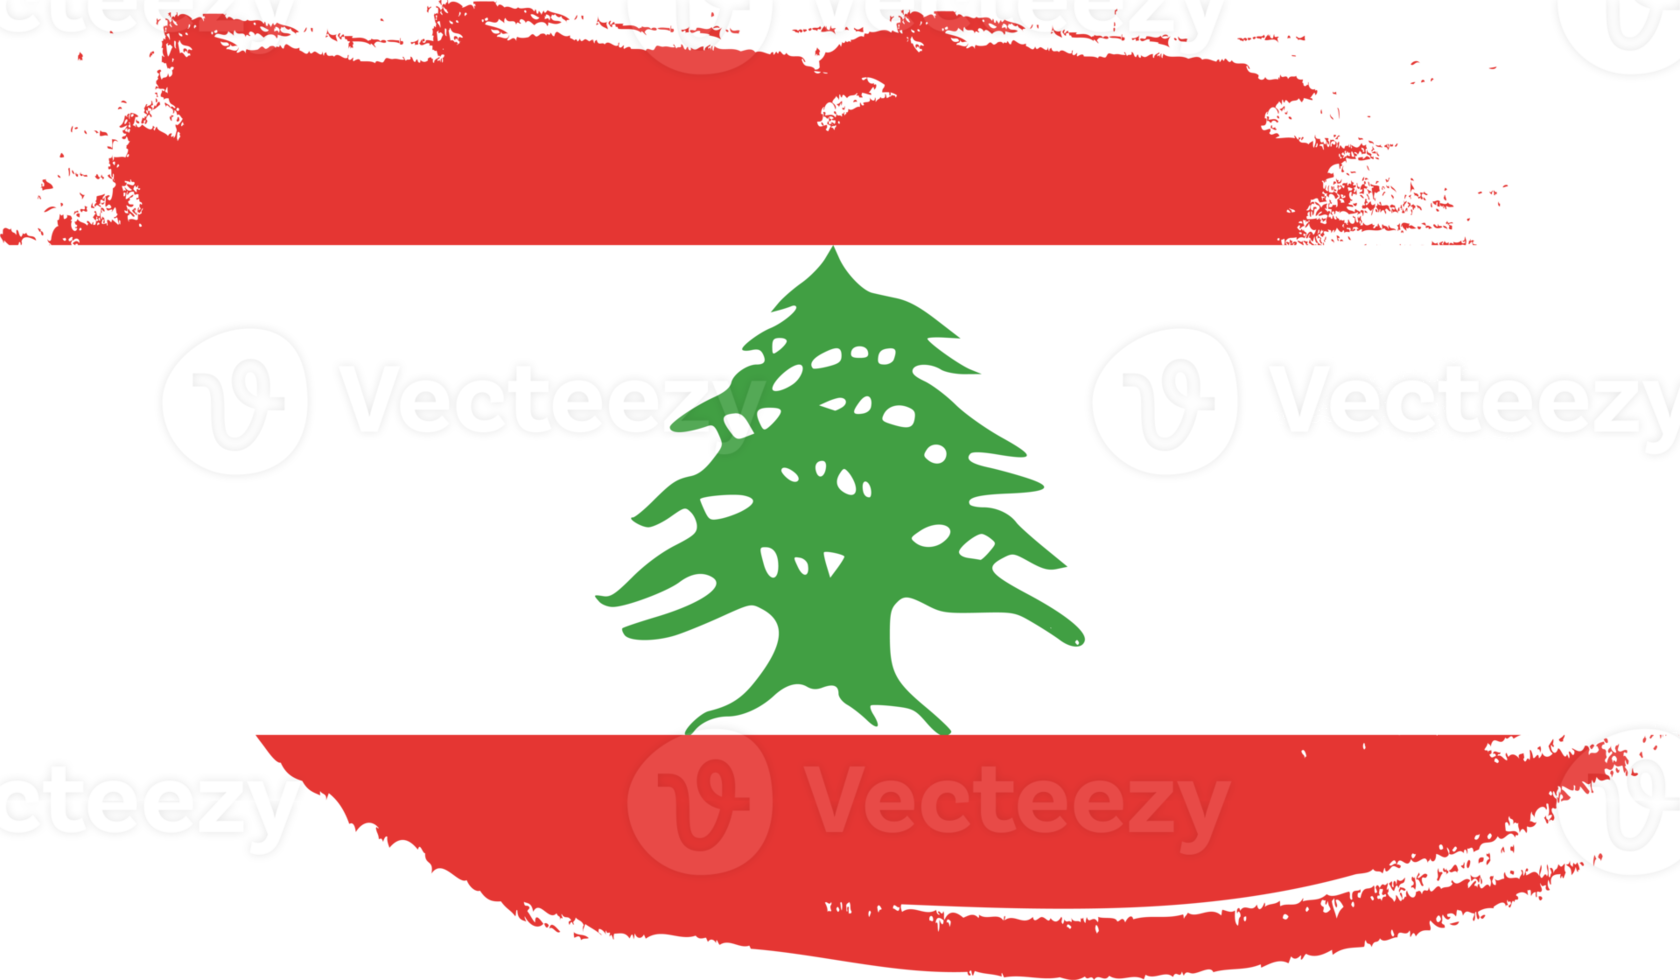 Libanon-Flagge mit Grunge-Textur png